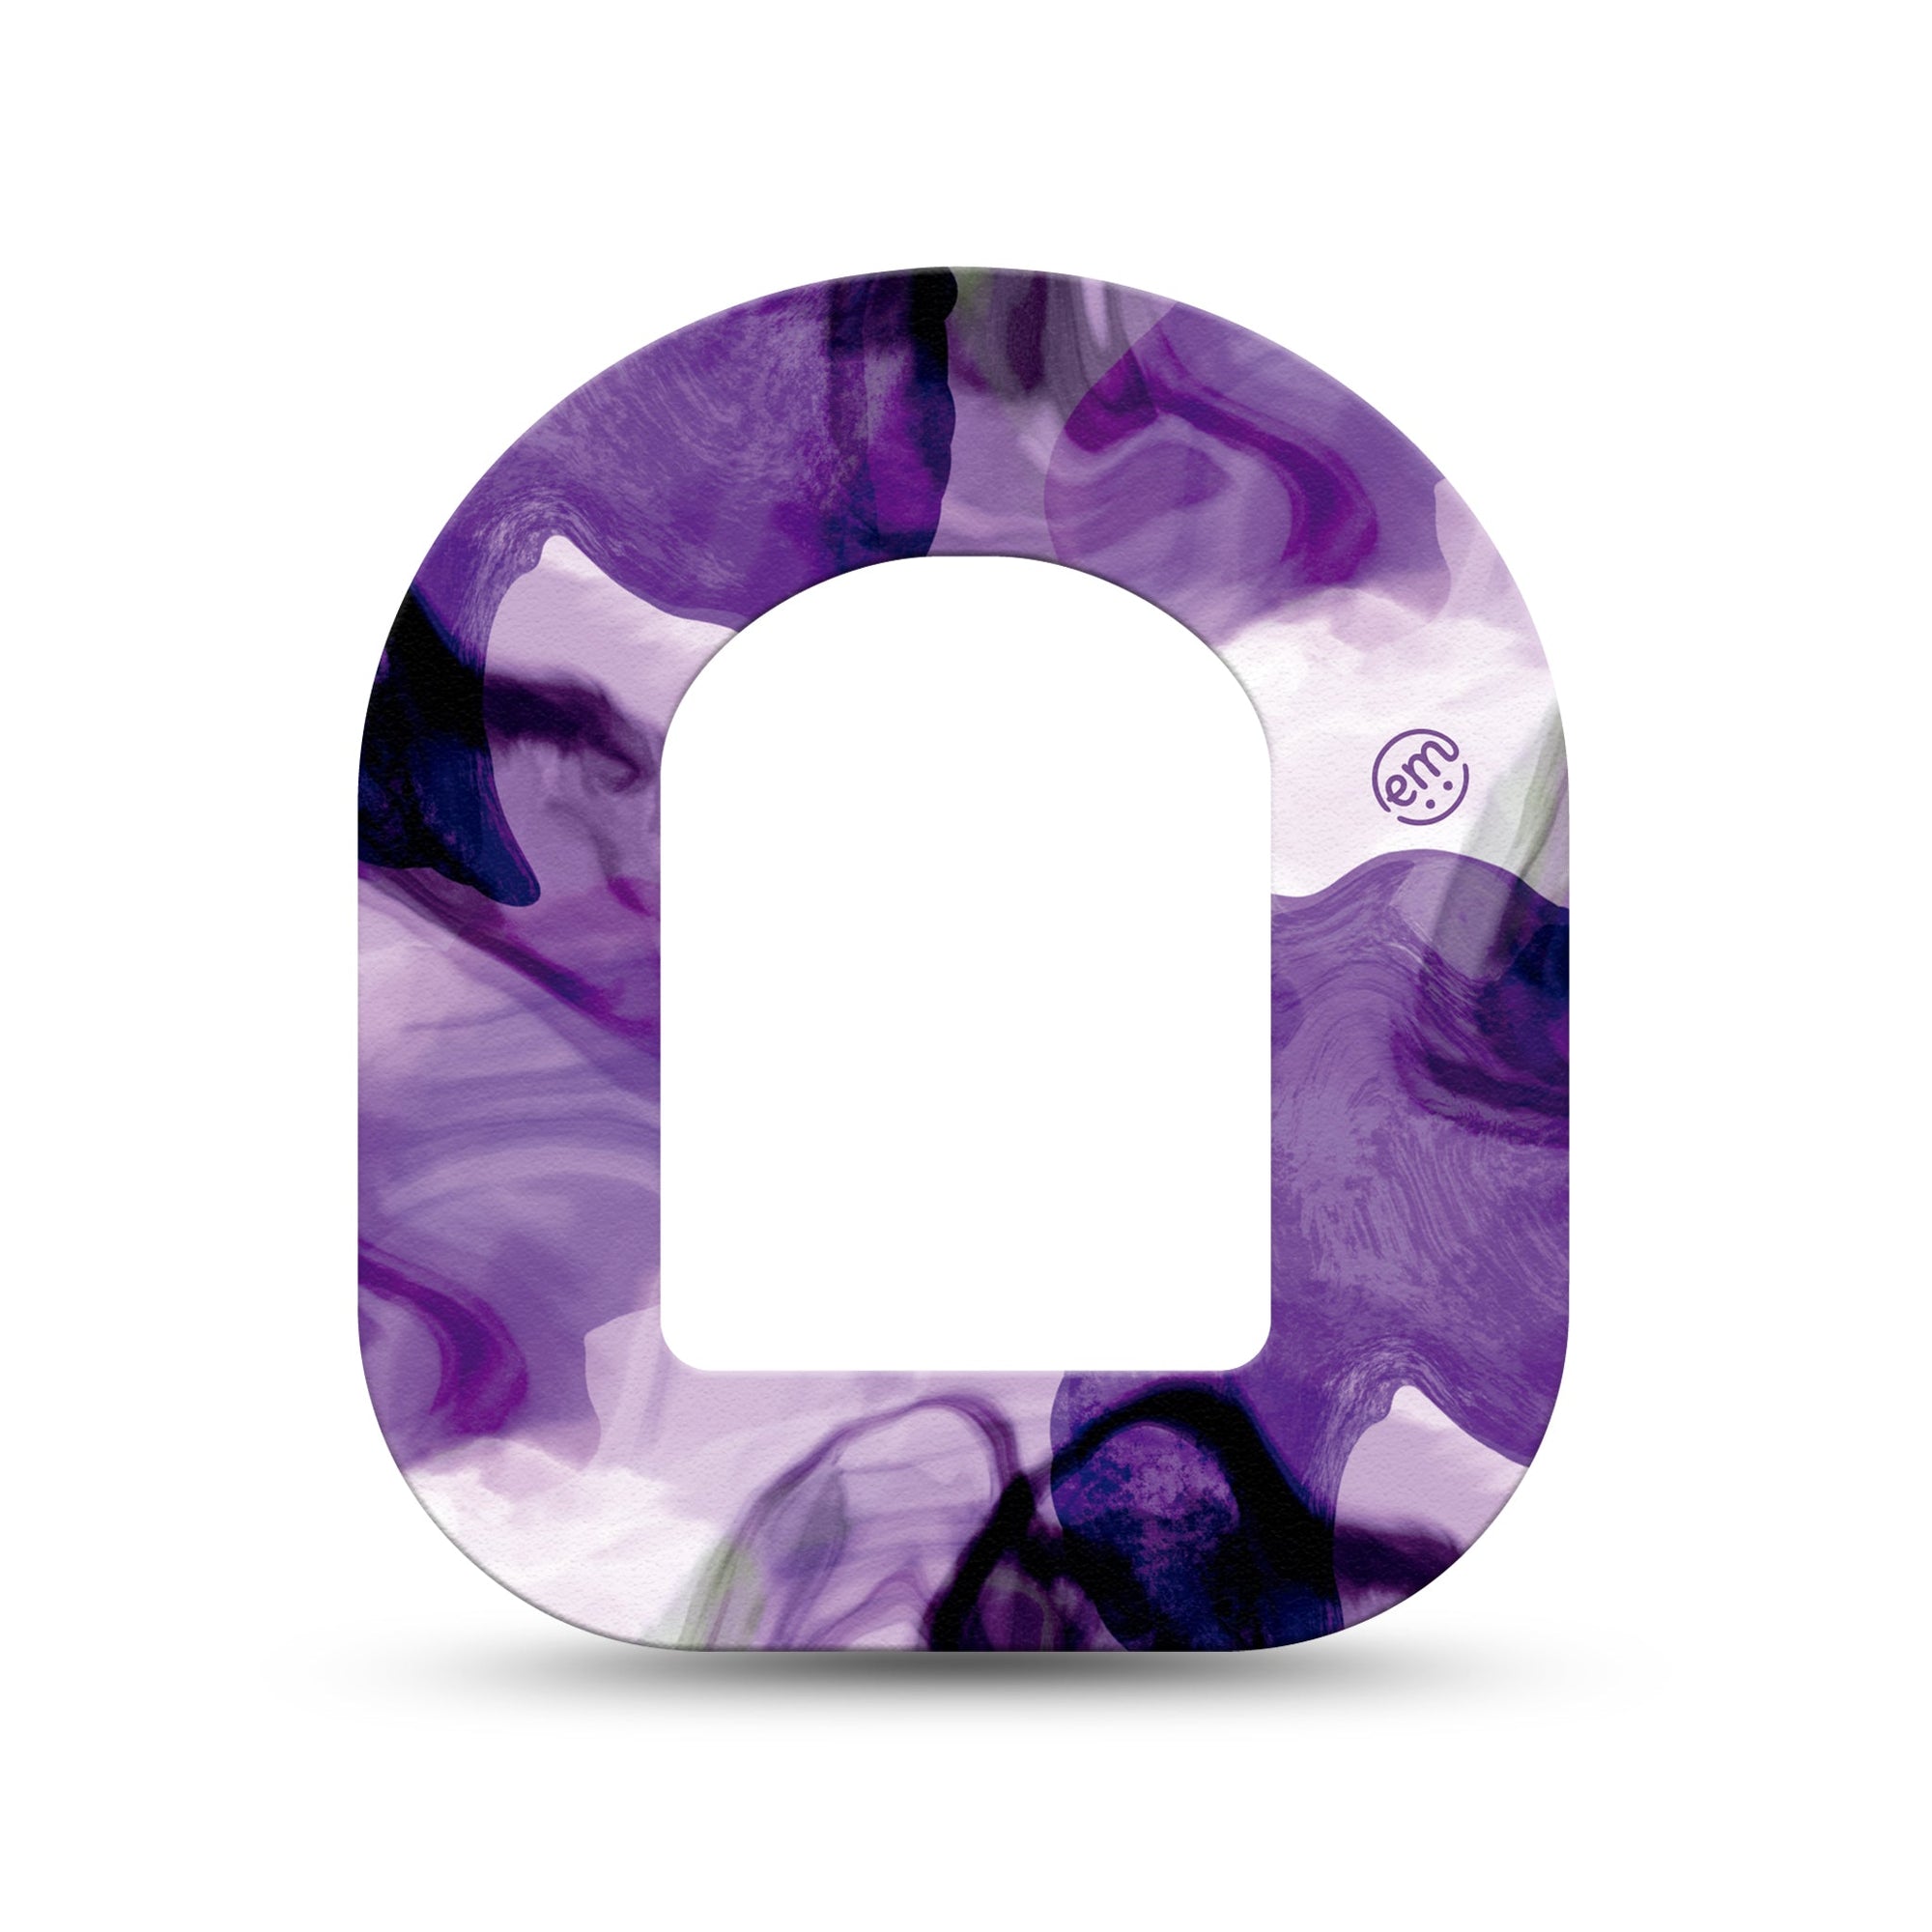 ExpressionMed Purple Storm Pod Mini Tape Single, Violet Tempest Fixing Ring Patch Pump Design